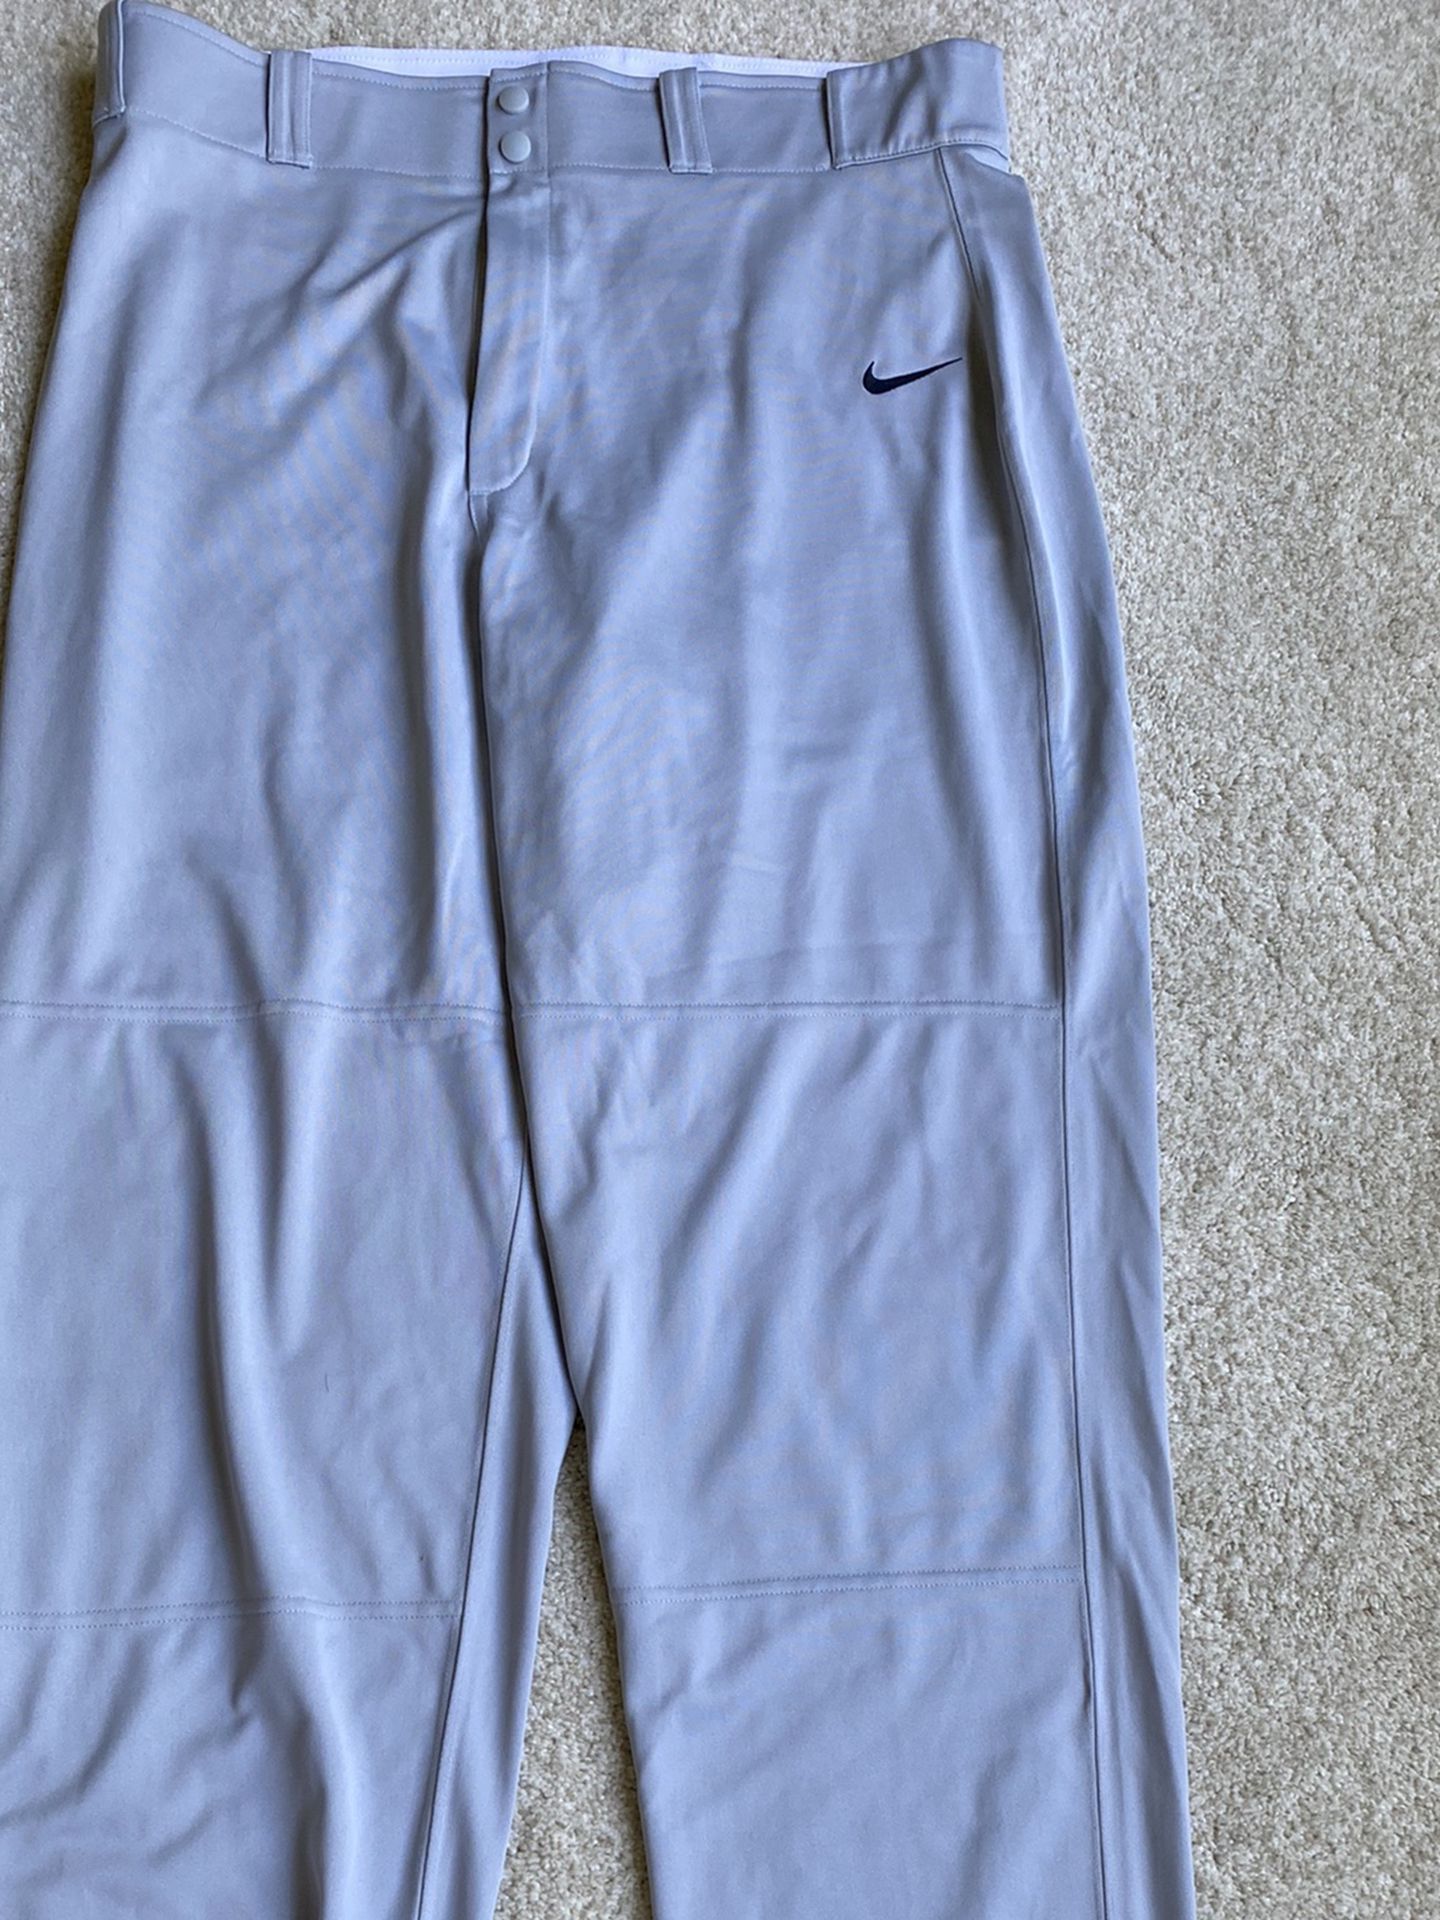 Nike  Dri-Fit Gray baseball pants